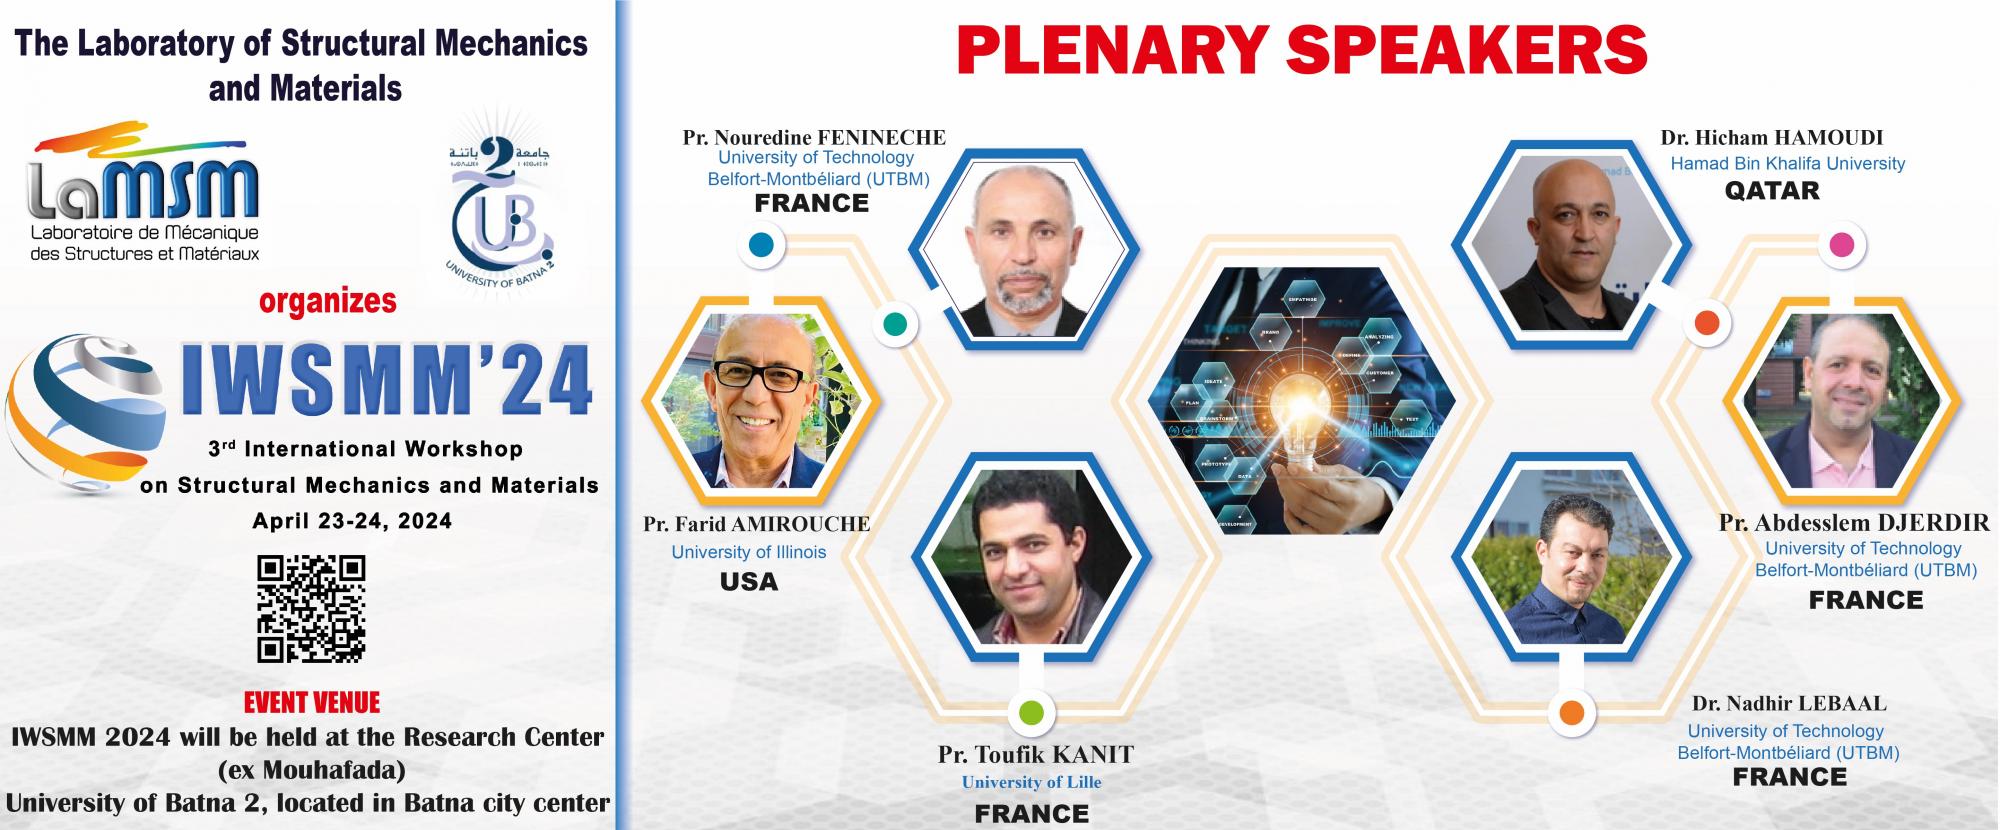 plenary_speakers